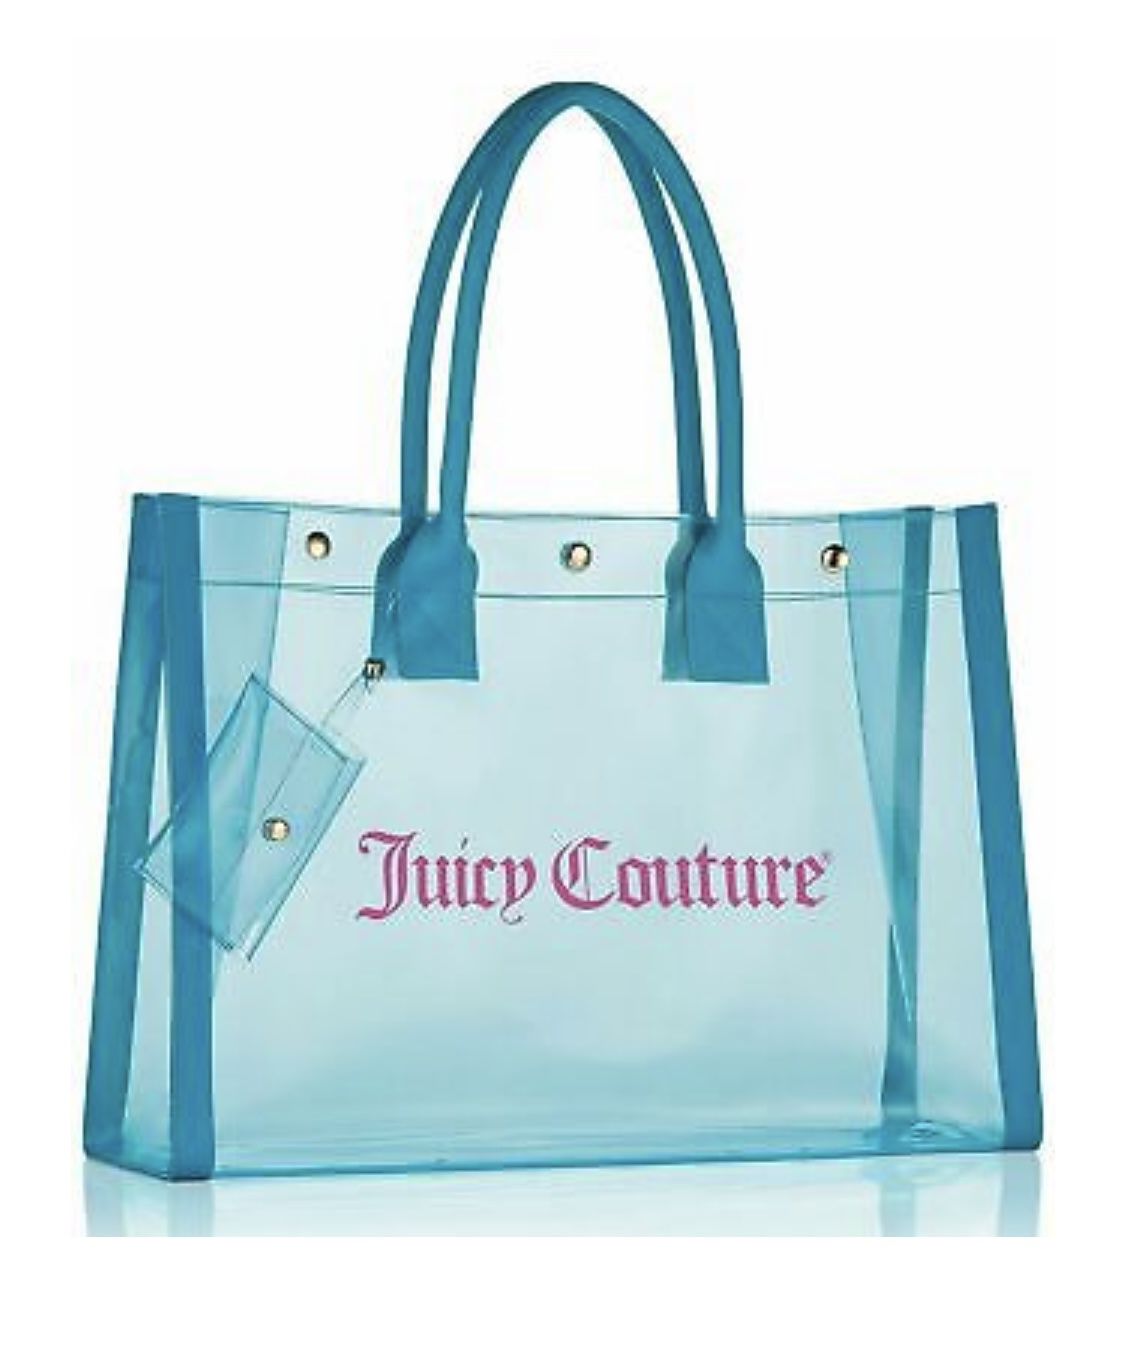 Juicy Couture Teal  Handbag Tote - New